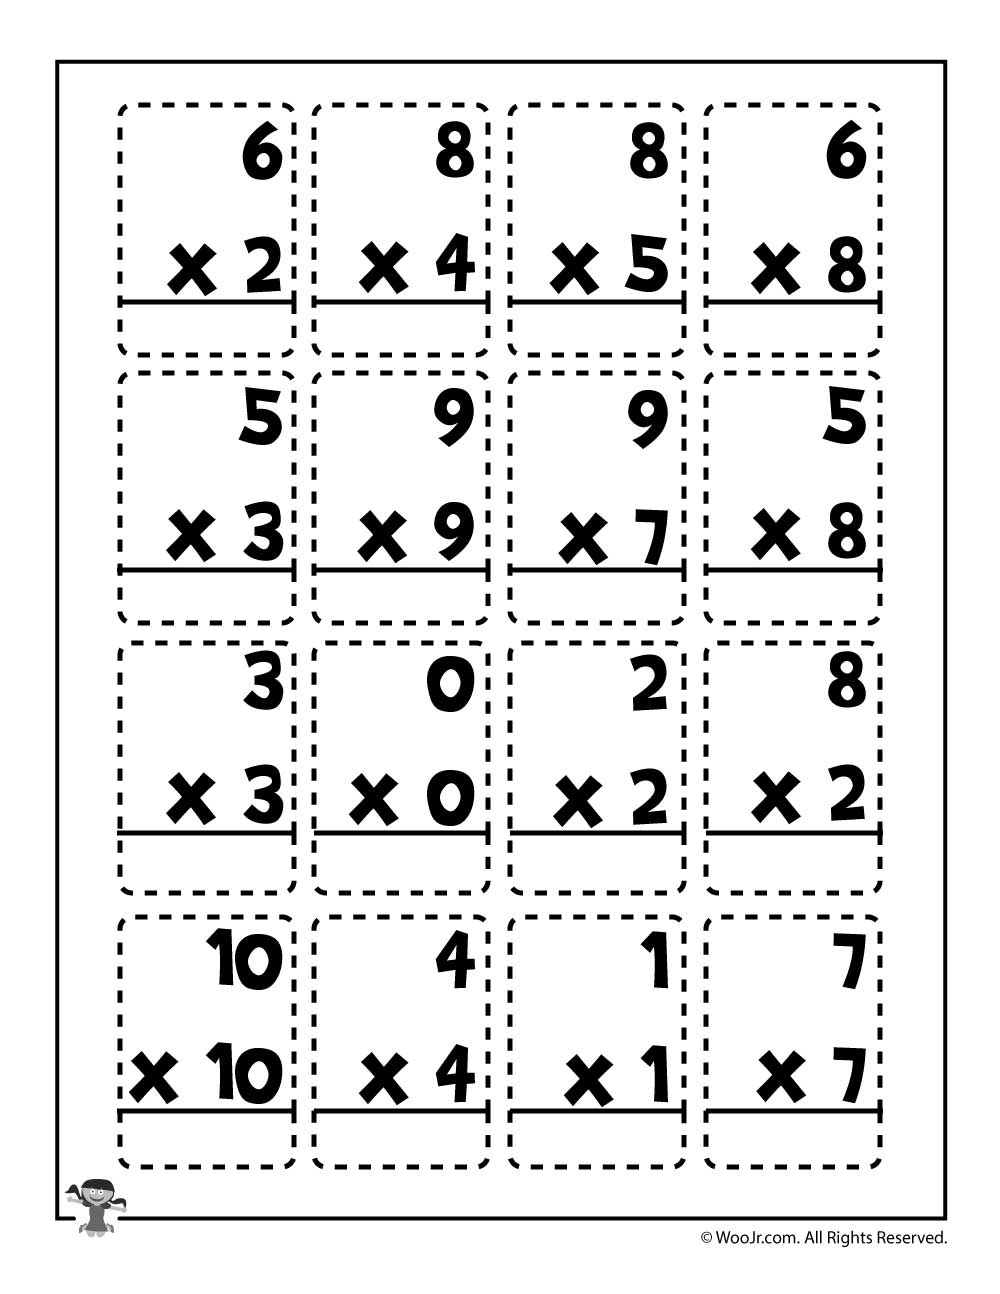 Multiplication Flashcard Math Worksheet | Woo! Jr. Kids